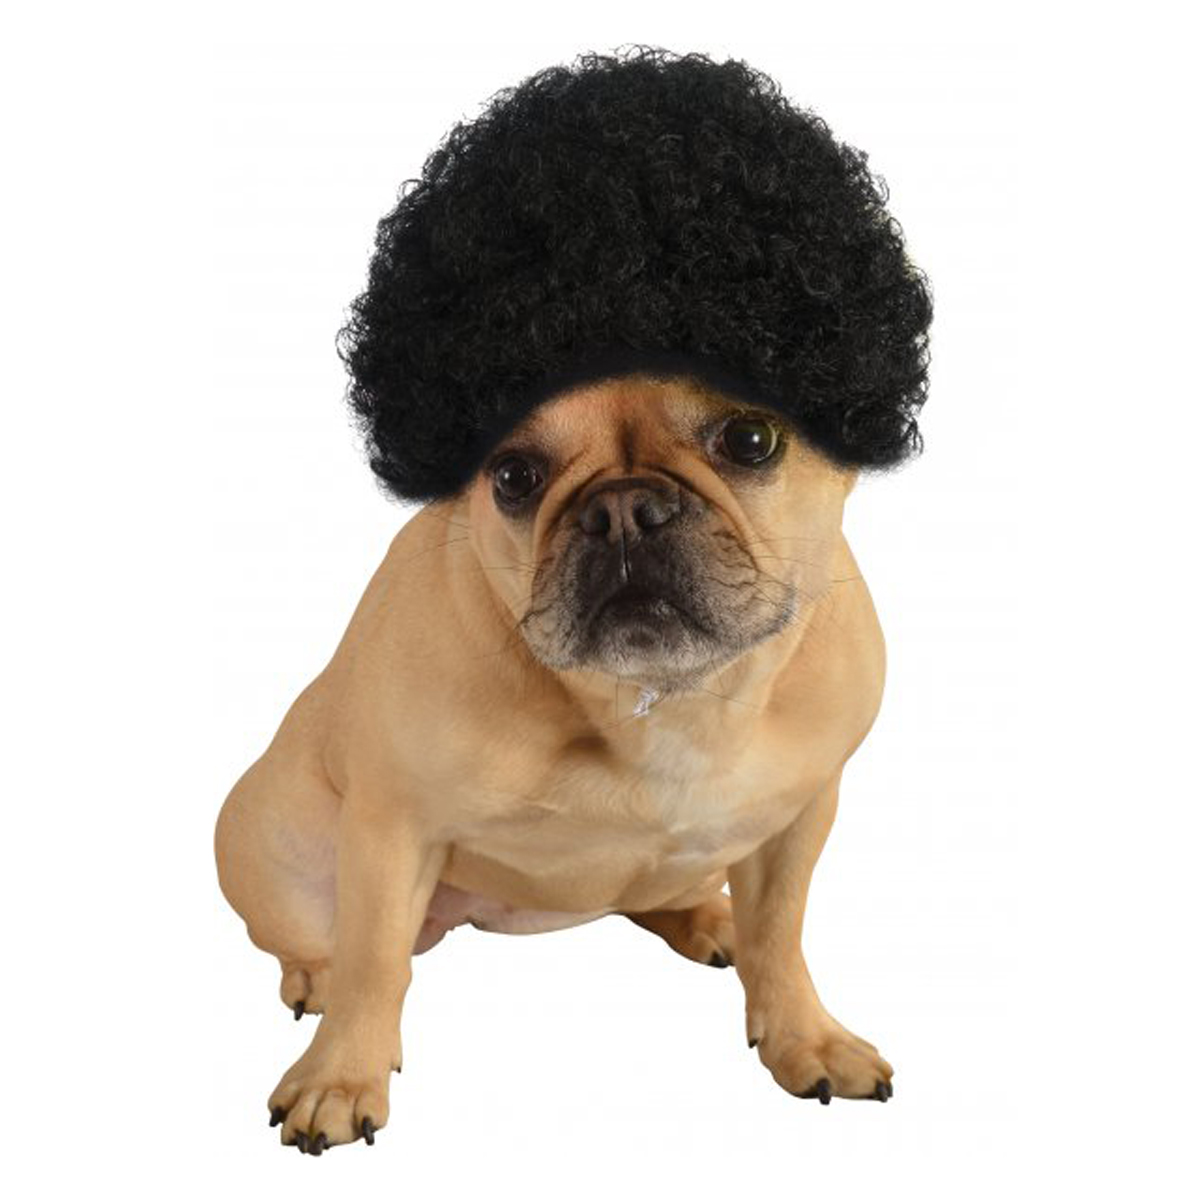 Afro Wig Dog Costume - Black